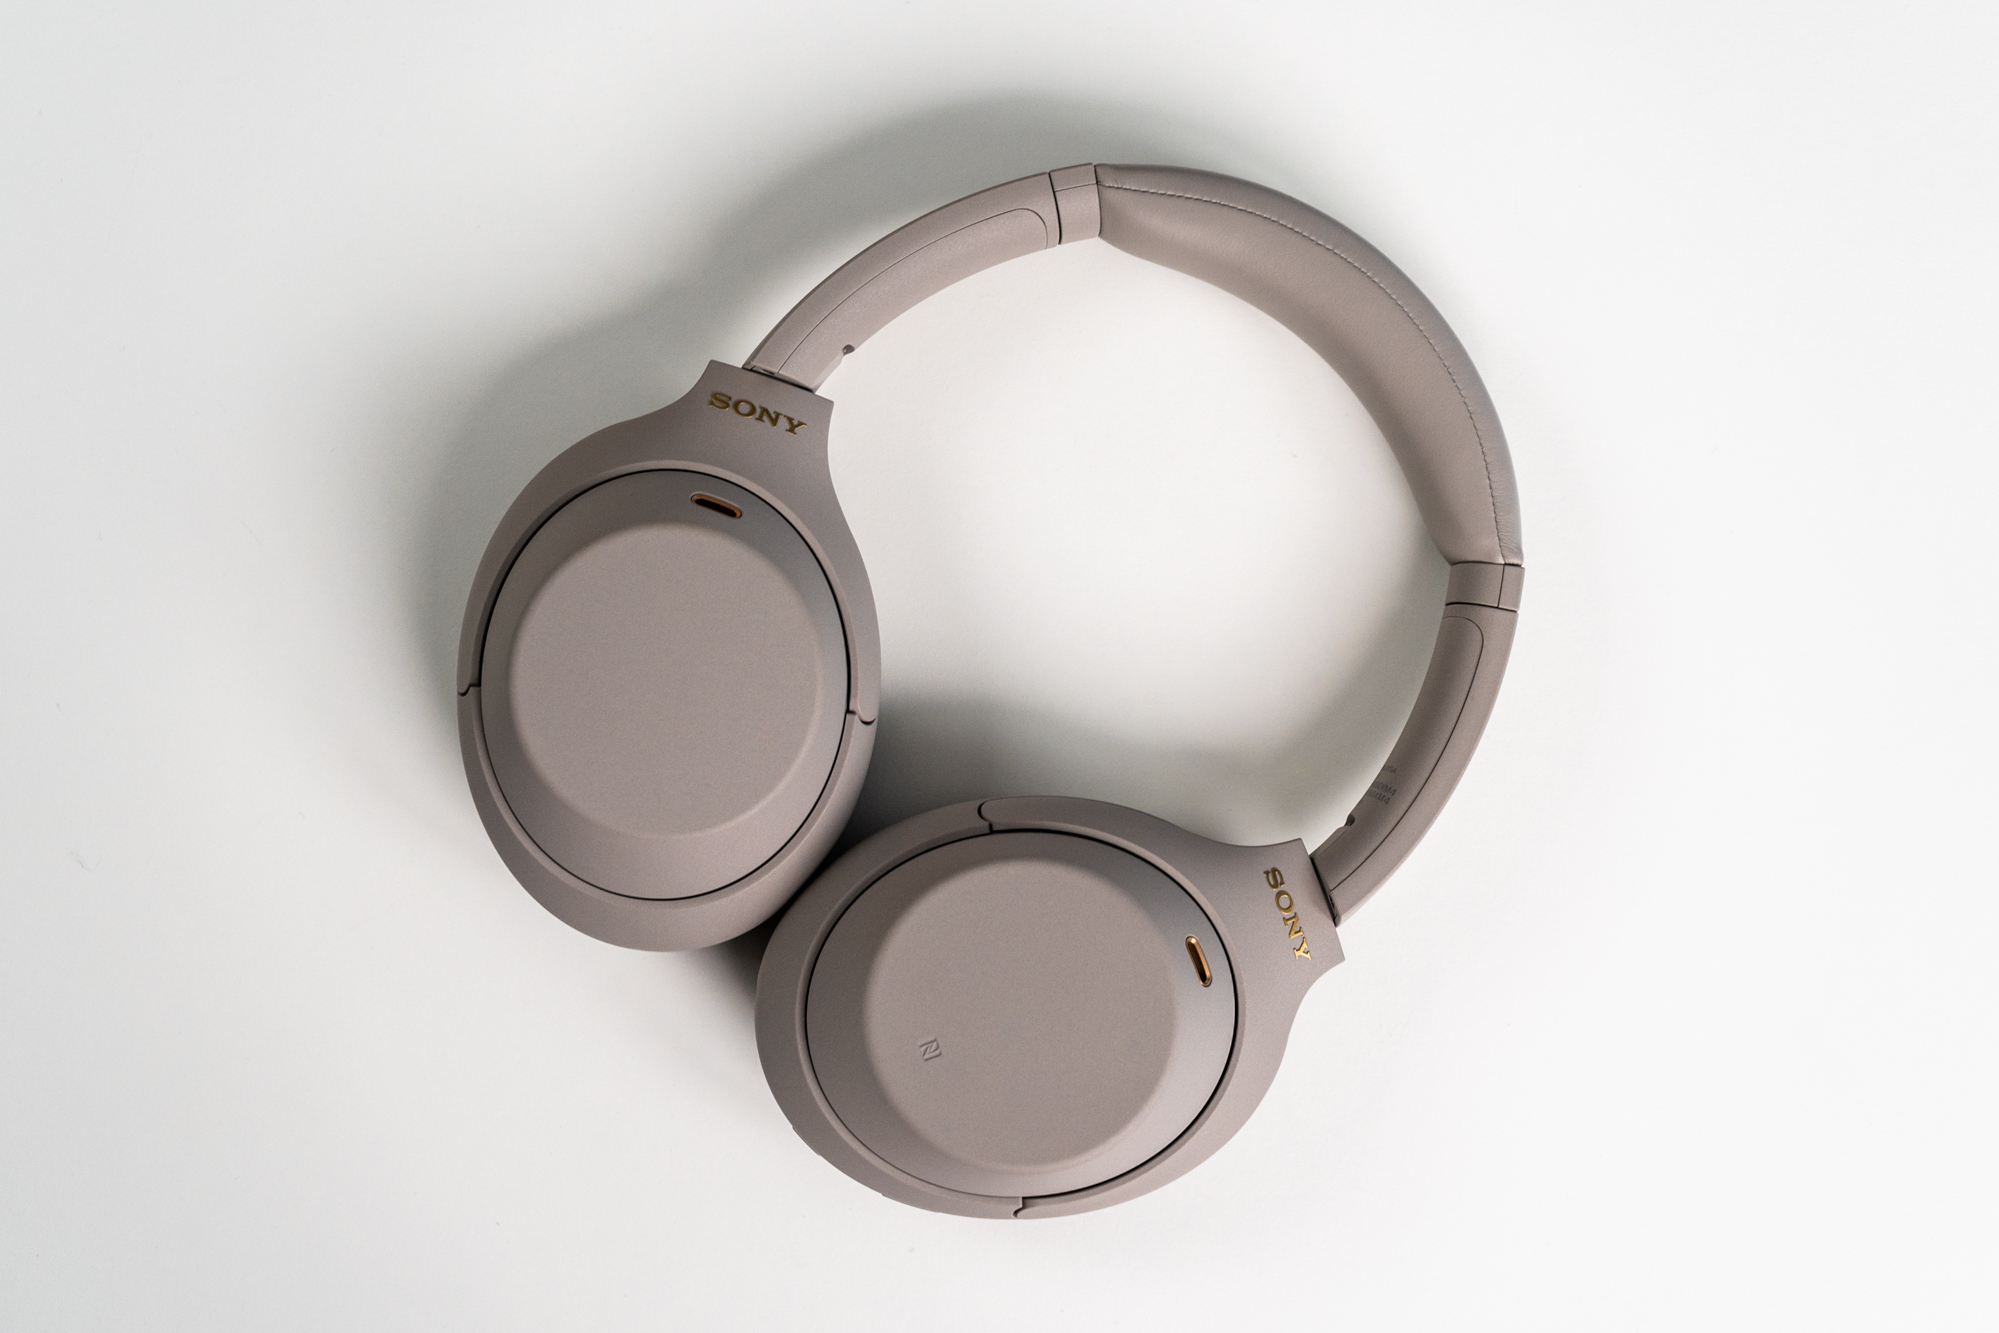 Sony WHXM4 Review: The Best Headphones Get Even Better